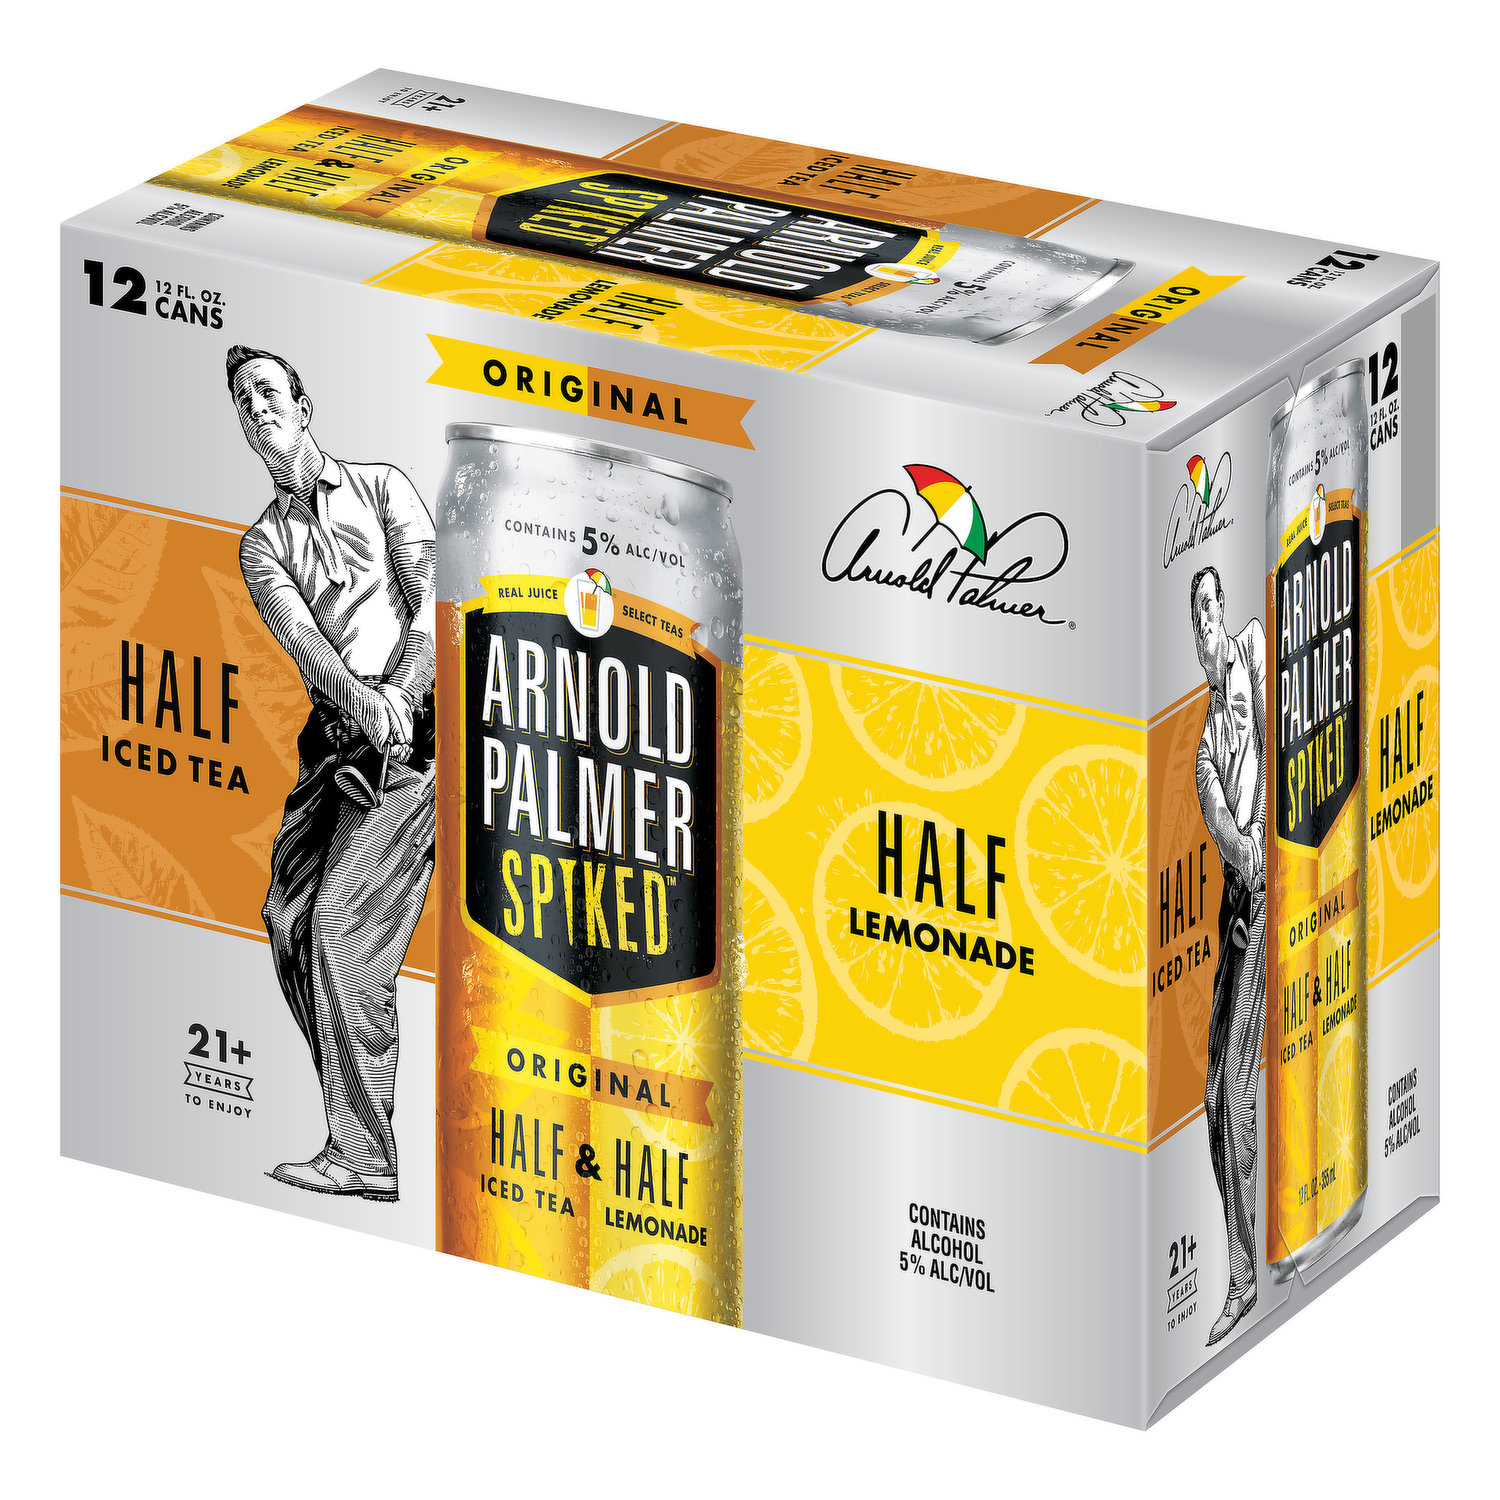 Arnold Palmer Spiked Beer, Half Iced Tea, Half Lemonade, Original 